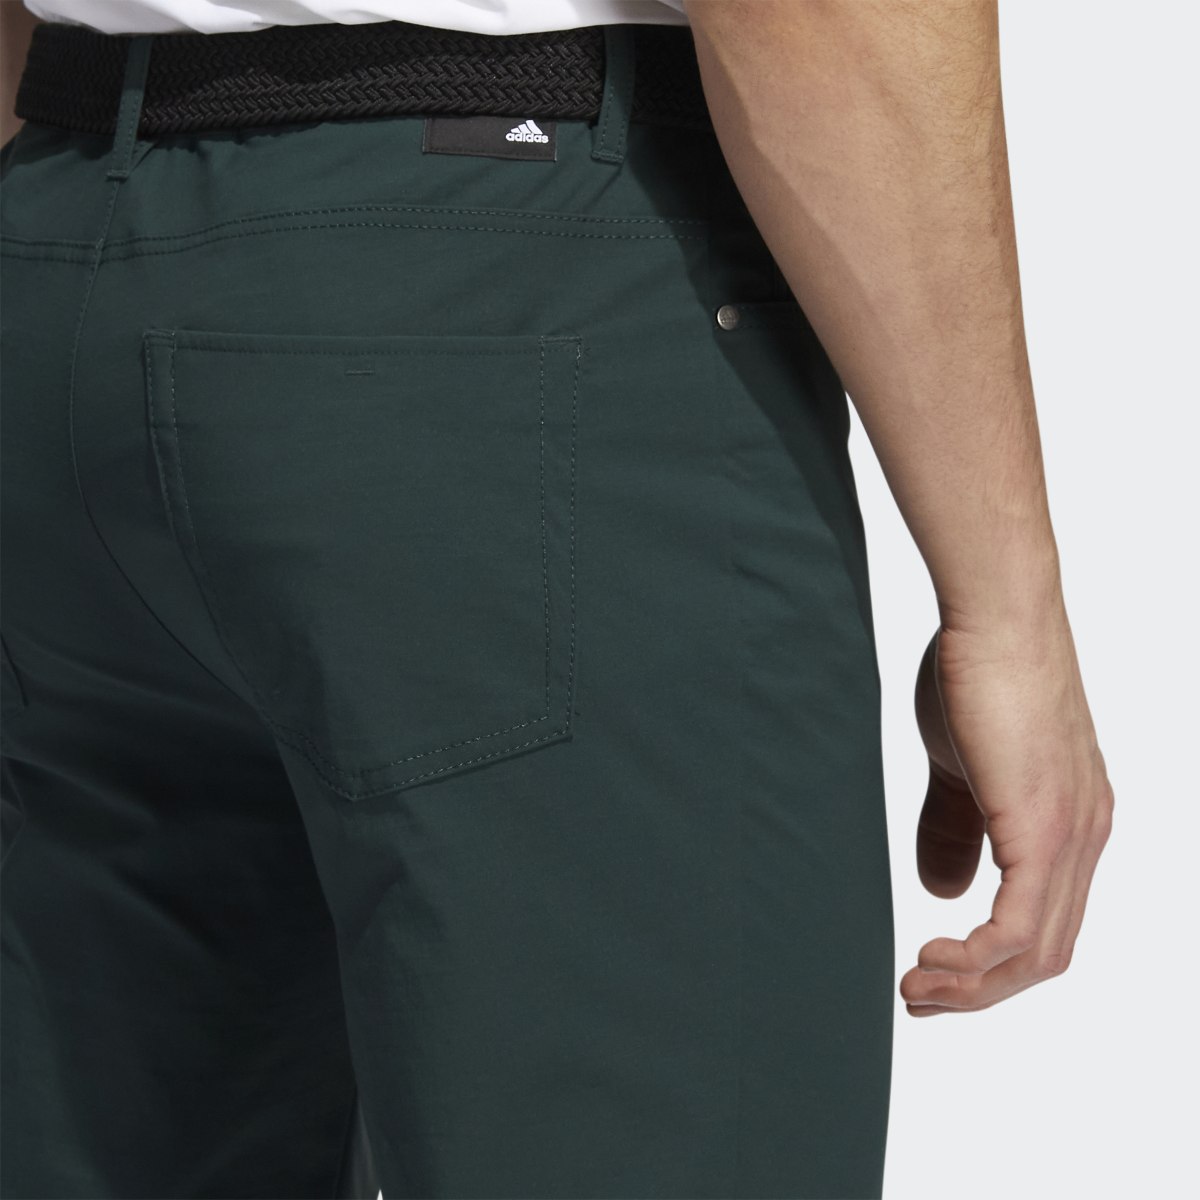 Adidas Pants Go-To-Five-Pocket. 6